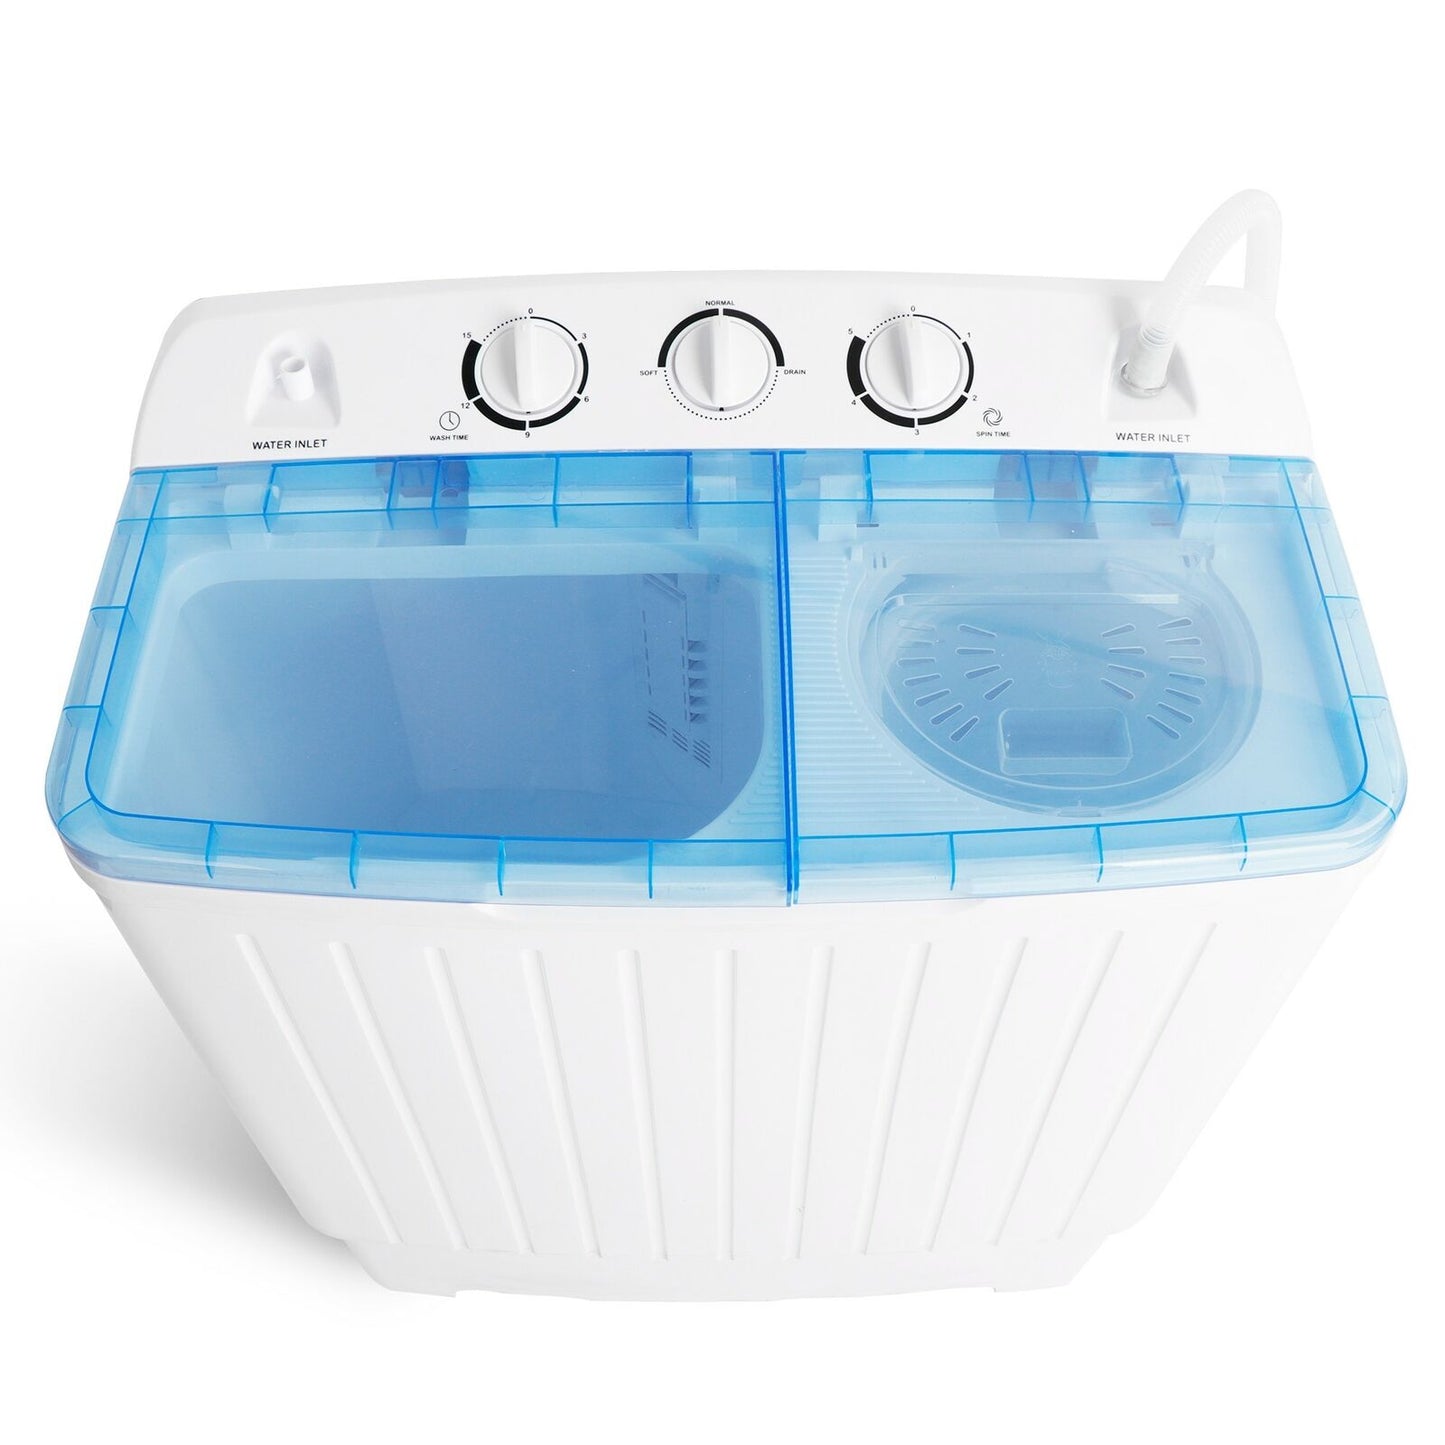 Portable Mini Compact Twin Tub Washing Machine 17.6lbs Washer and Dryer Laundry